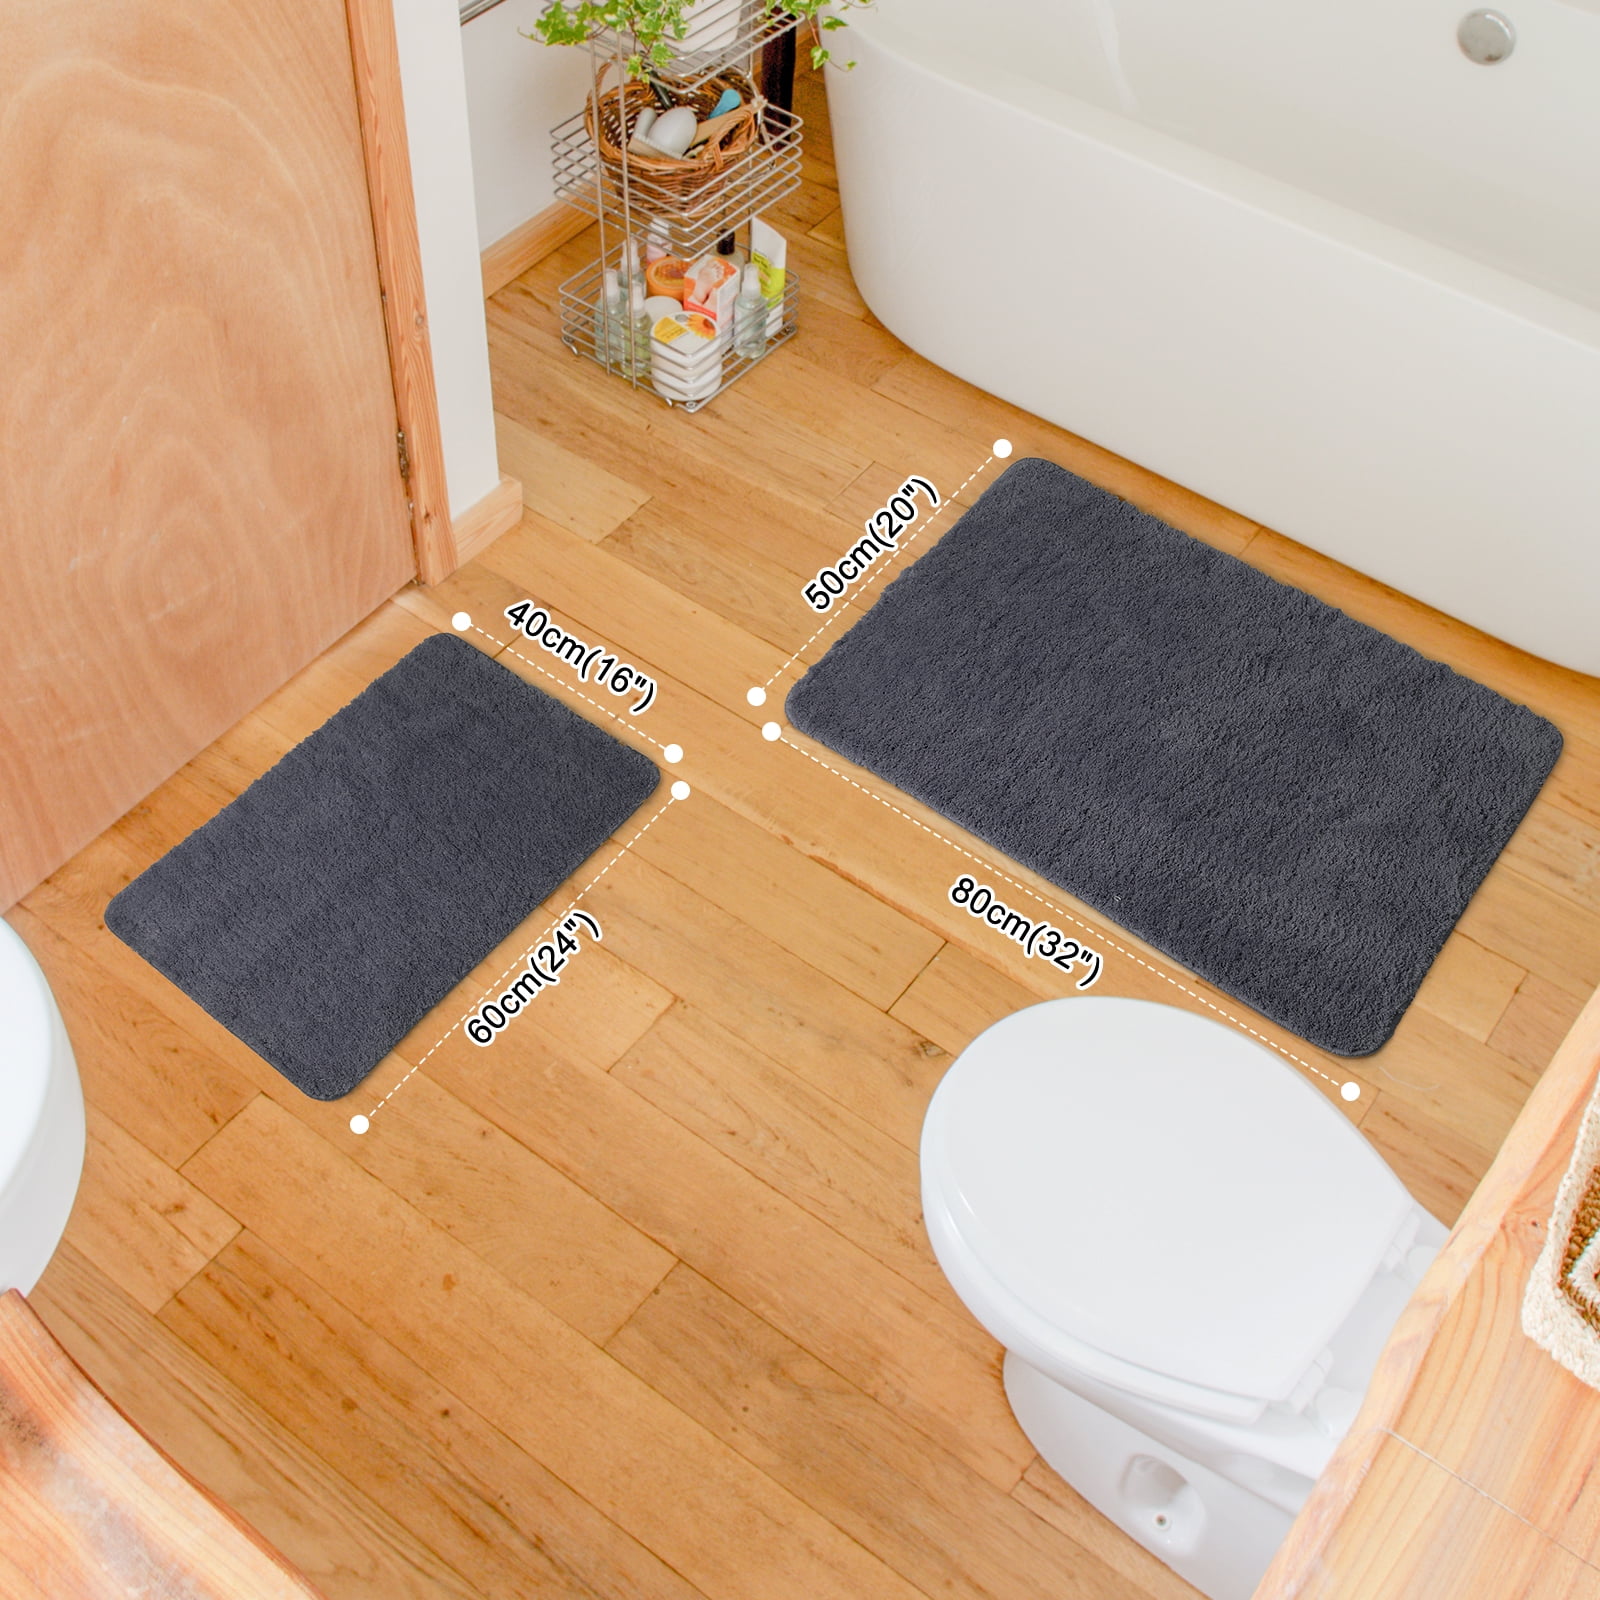 TYCOM Bathroom Rugs Bath Mat, 50x80cm, Non-Slip Fluffy Soft Plush Micr